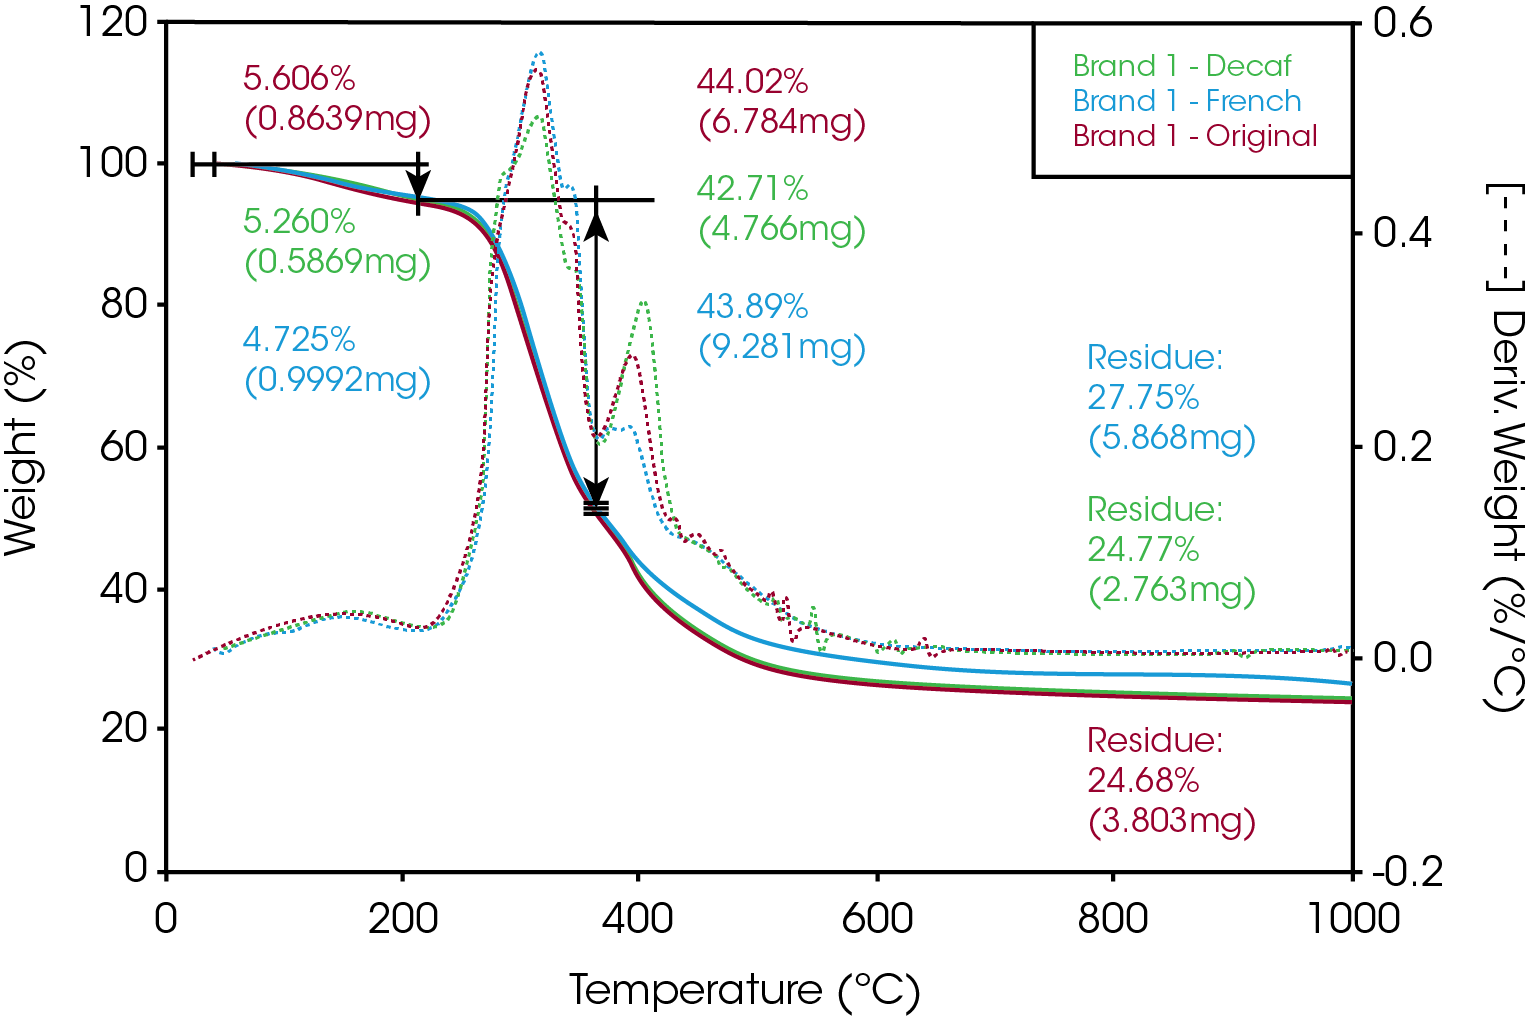 Figure 1. Overlay of TGA data for three different roast varieties of Brand 1 coffee.